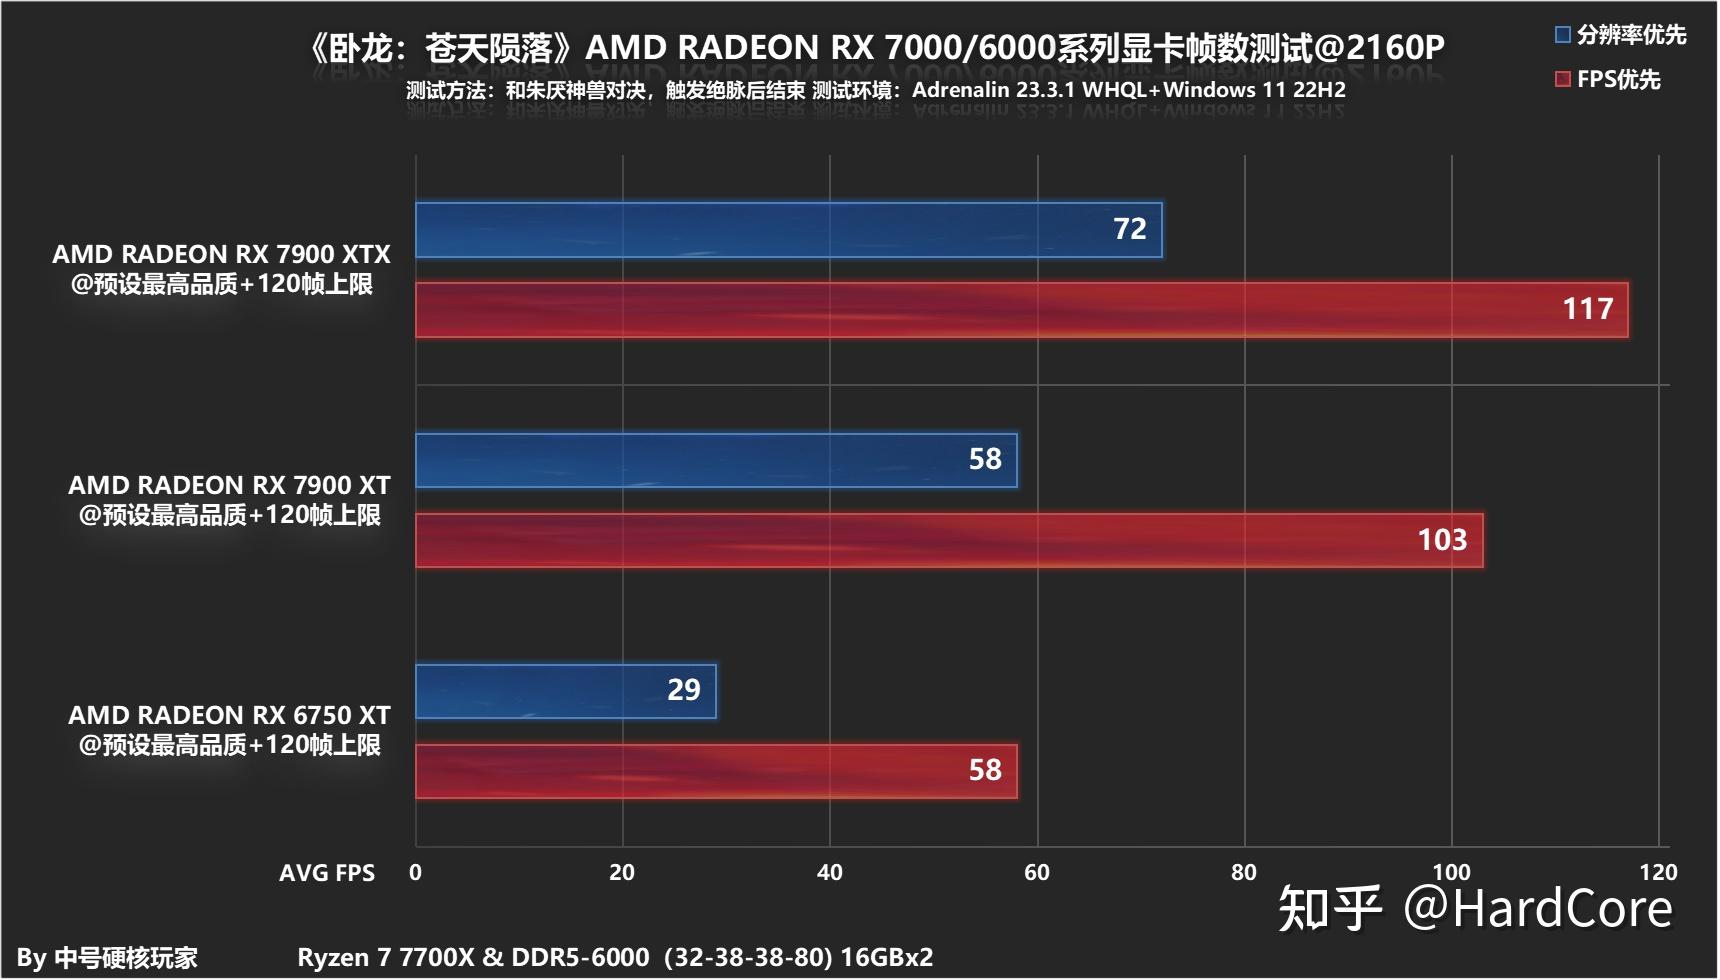 NVIDIA GeForce GTX 1060 3G性能分析及赛车计划5流畅运行探讨  第6张